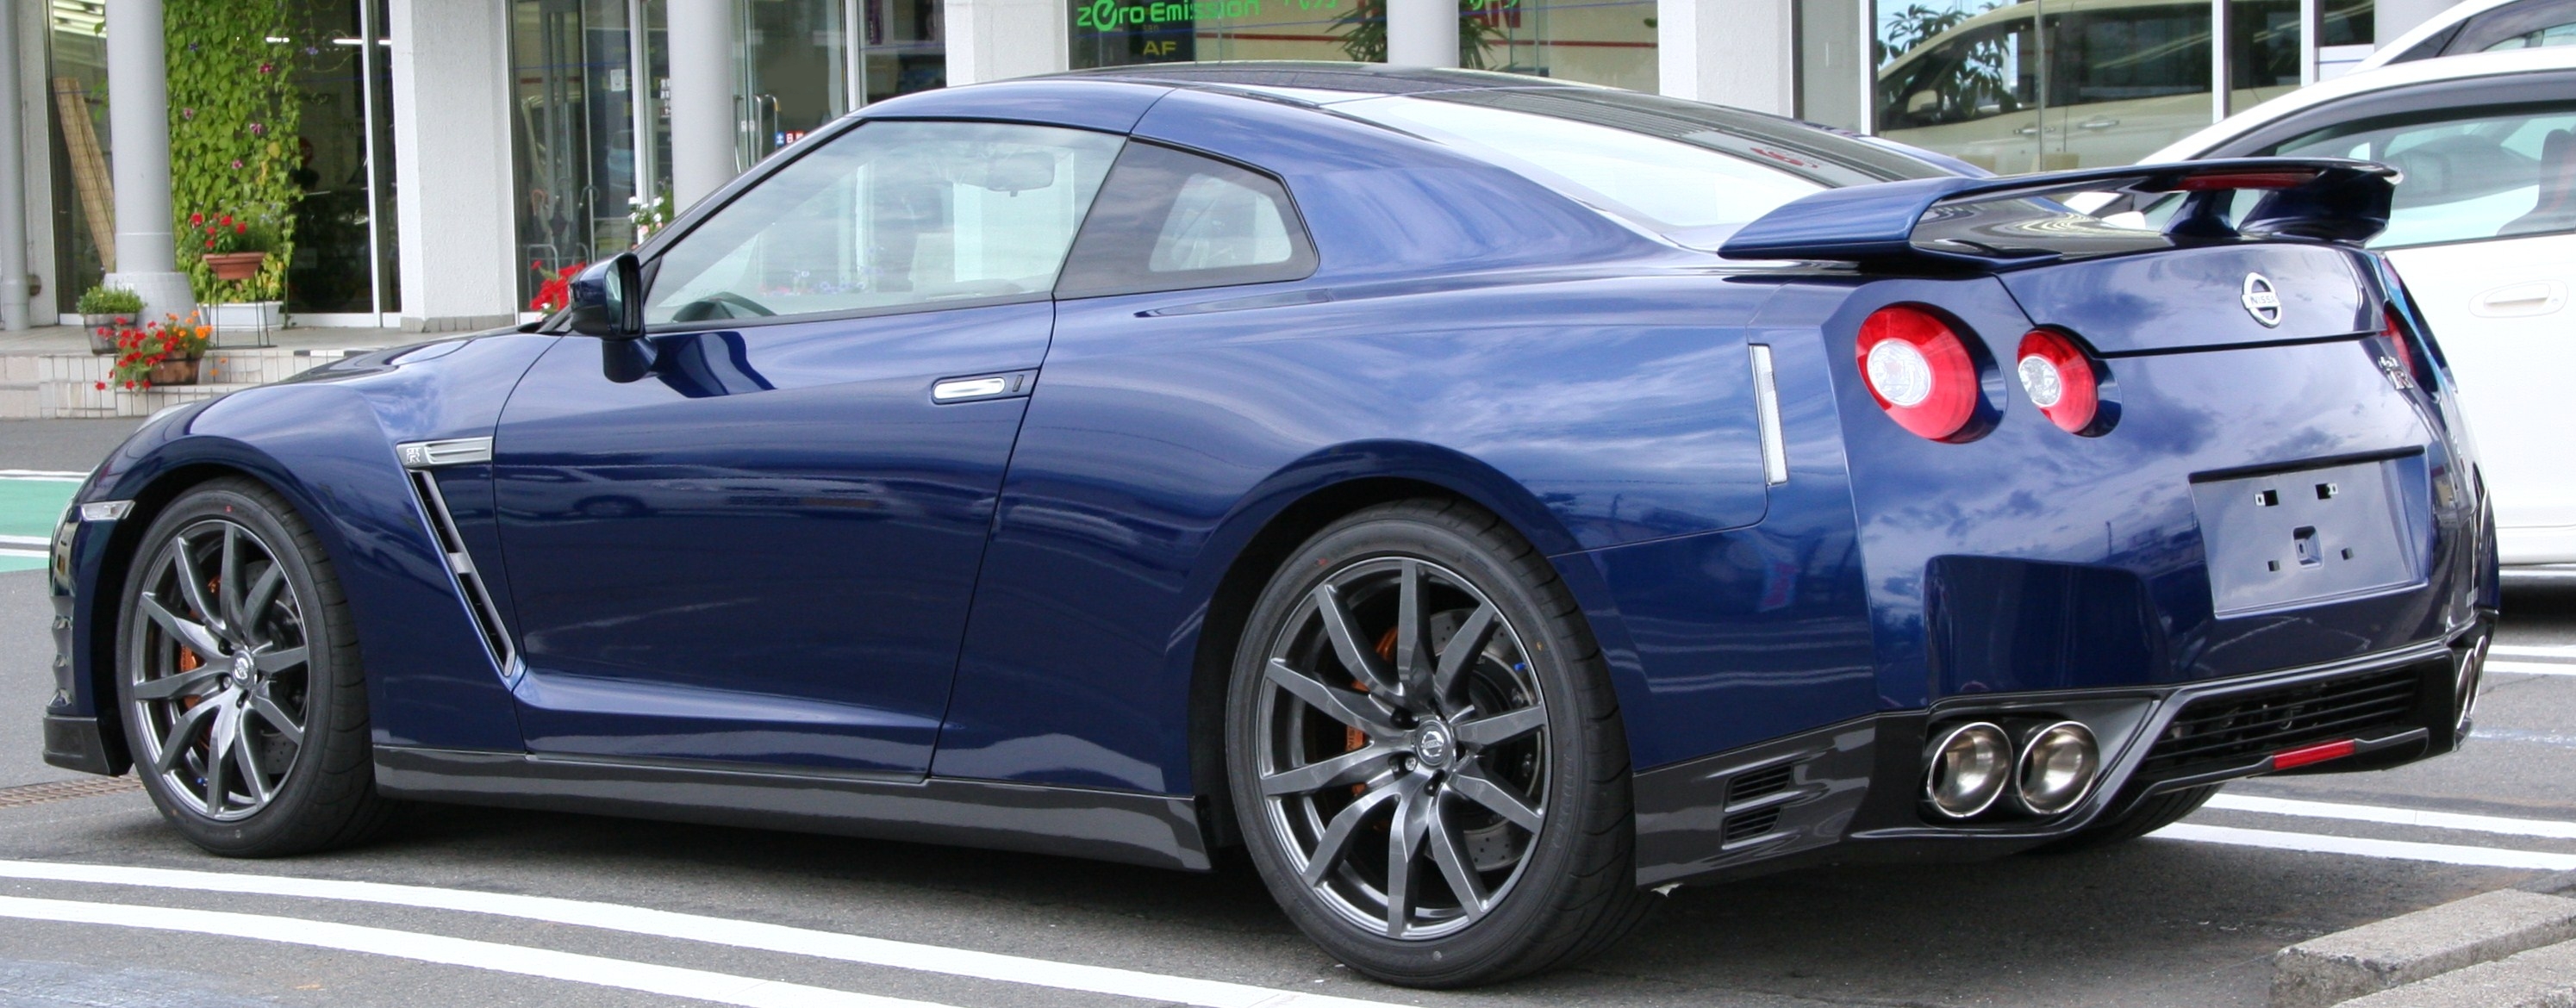 2010 NISSAN GT-R rear